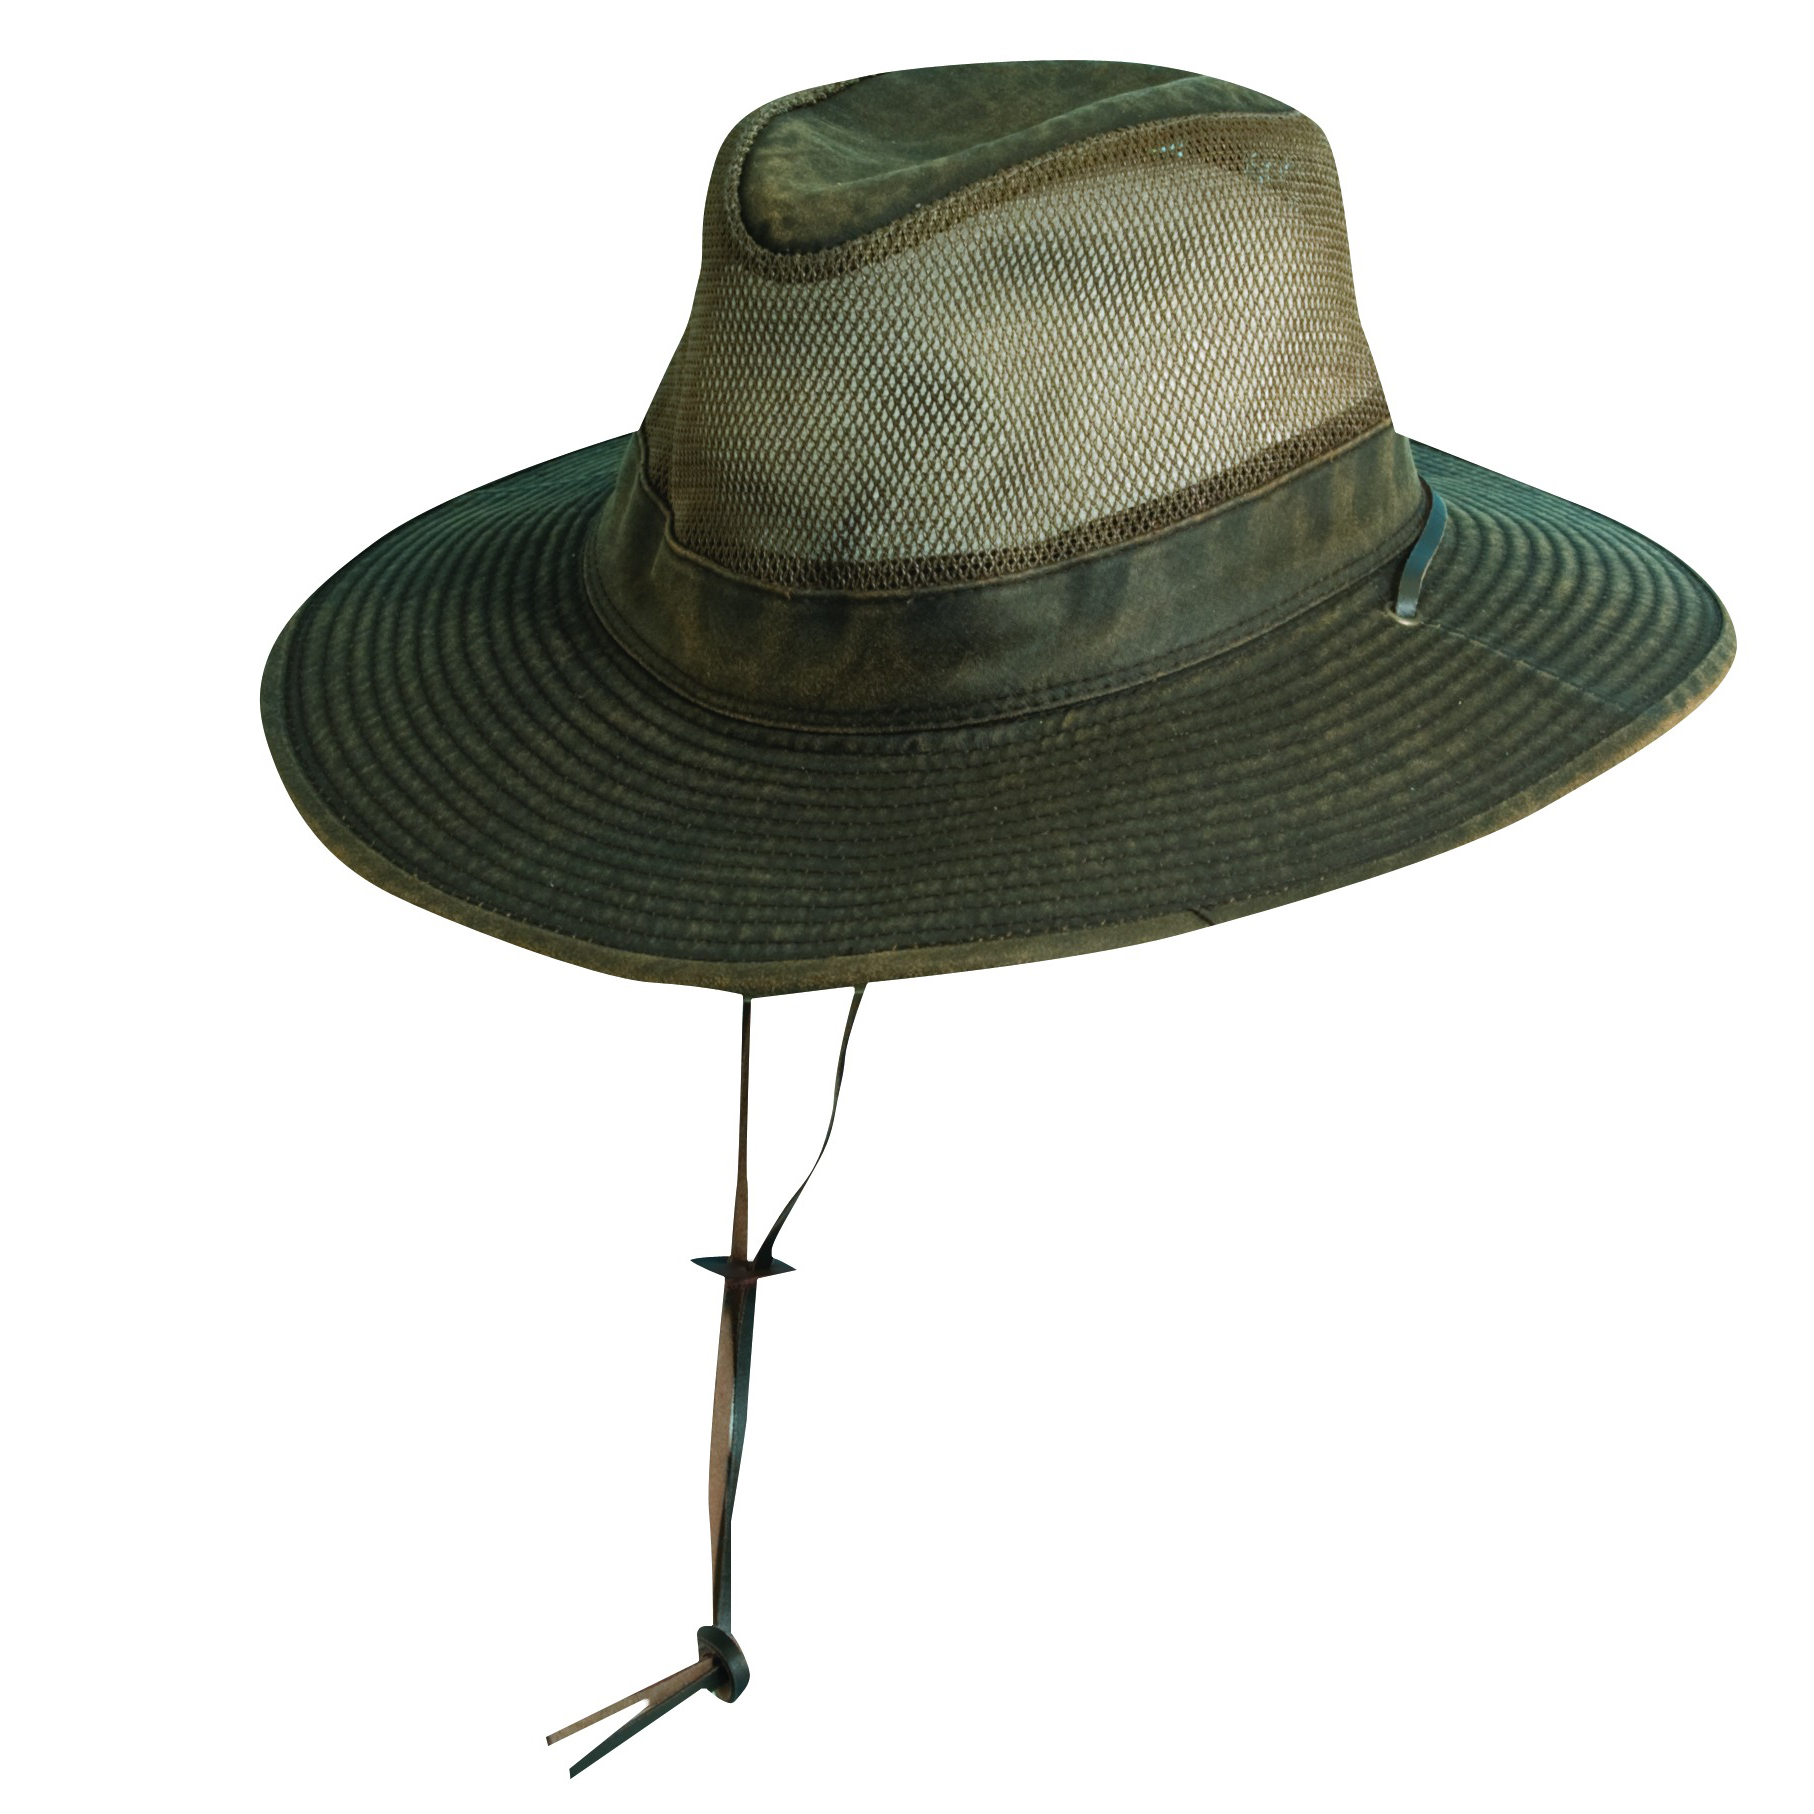 safari hat clipart - photo #33